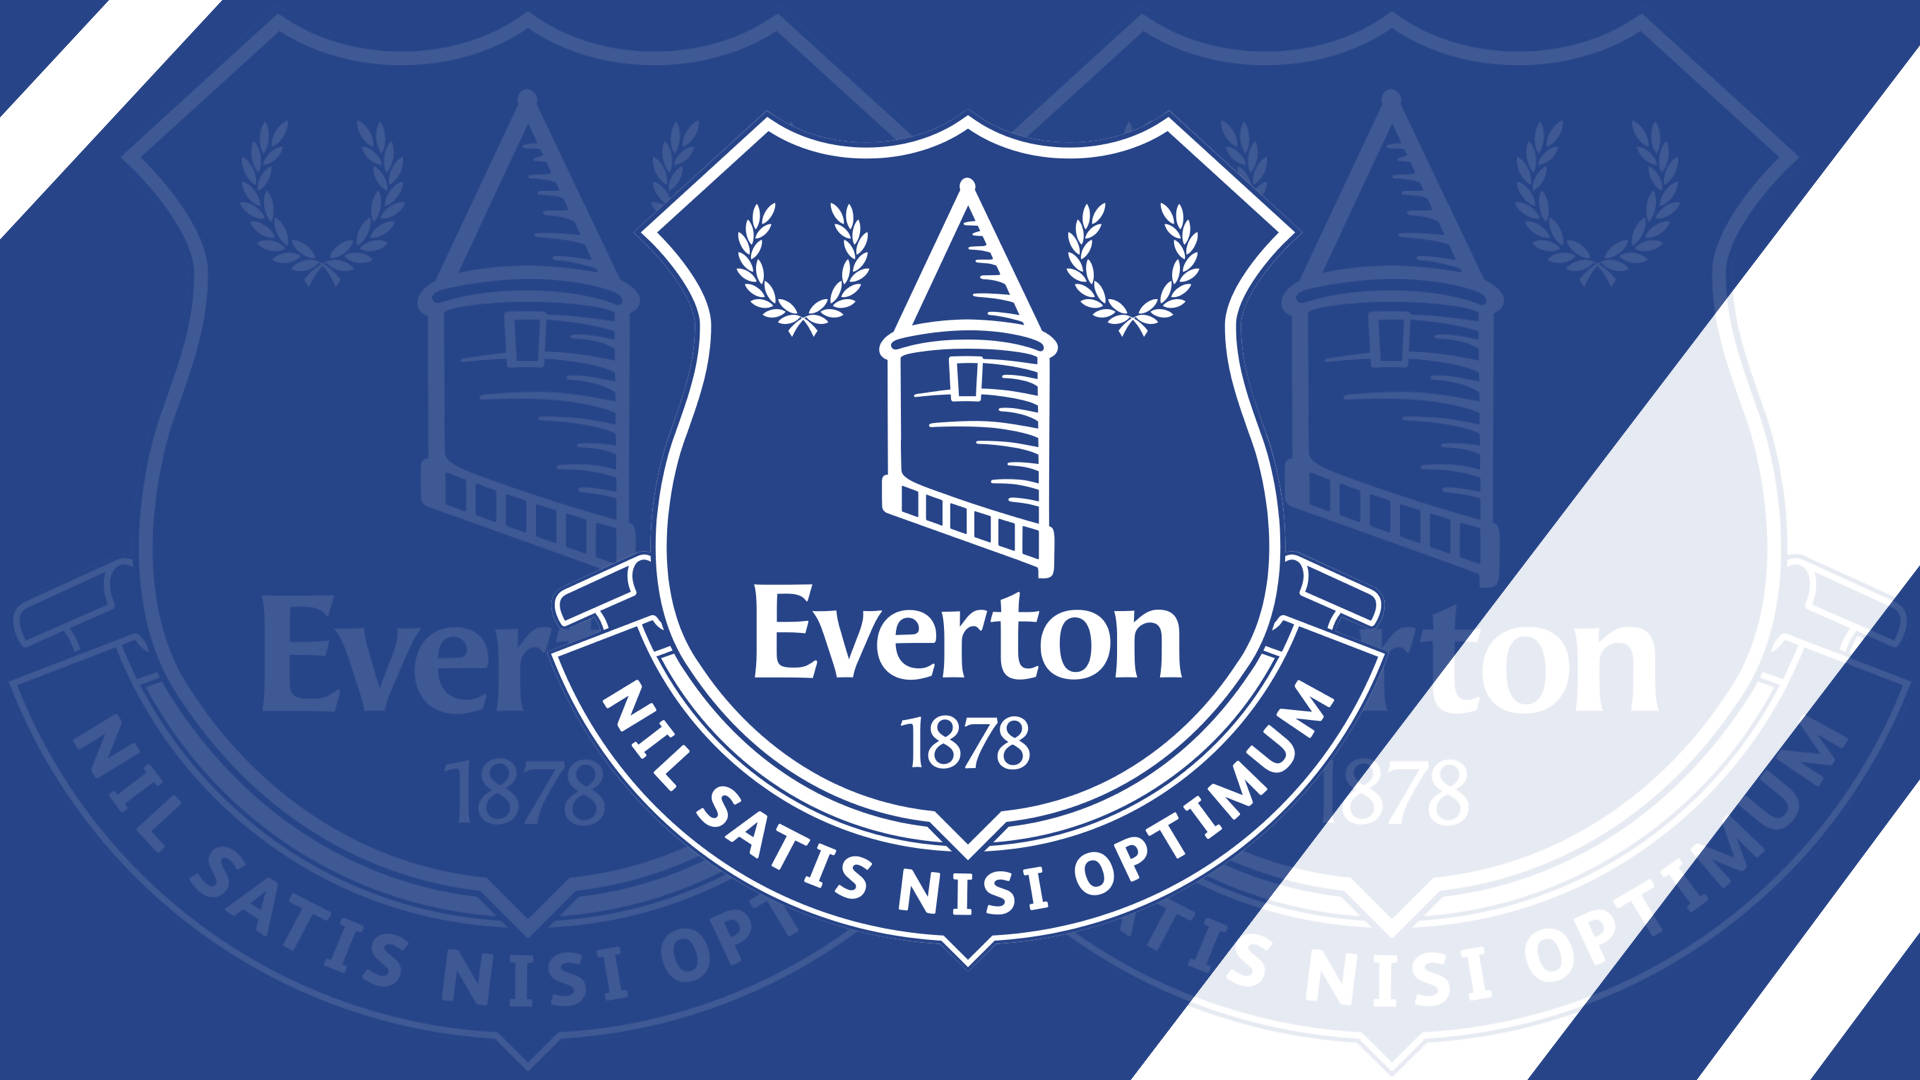 Everton F.c. The Blues Background